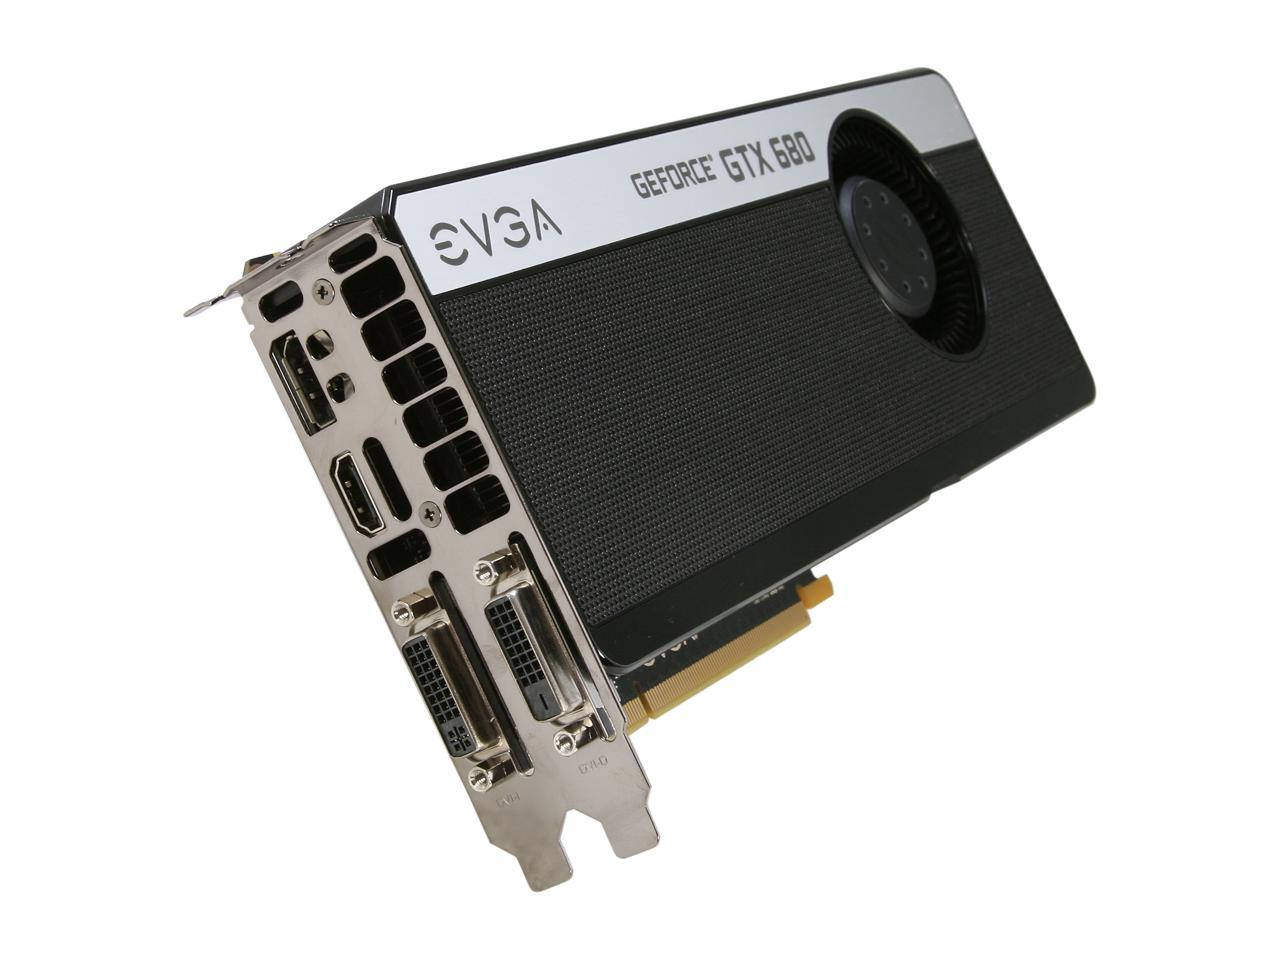 DVI-D HDMI Graphics Card  for Mac 02G-P4-3682-KR EVGA GeForce GTX680 2GB GDDR5 DisplayPort DVI-I